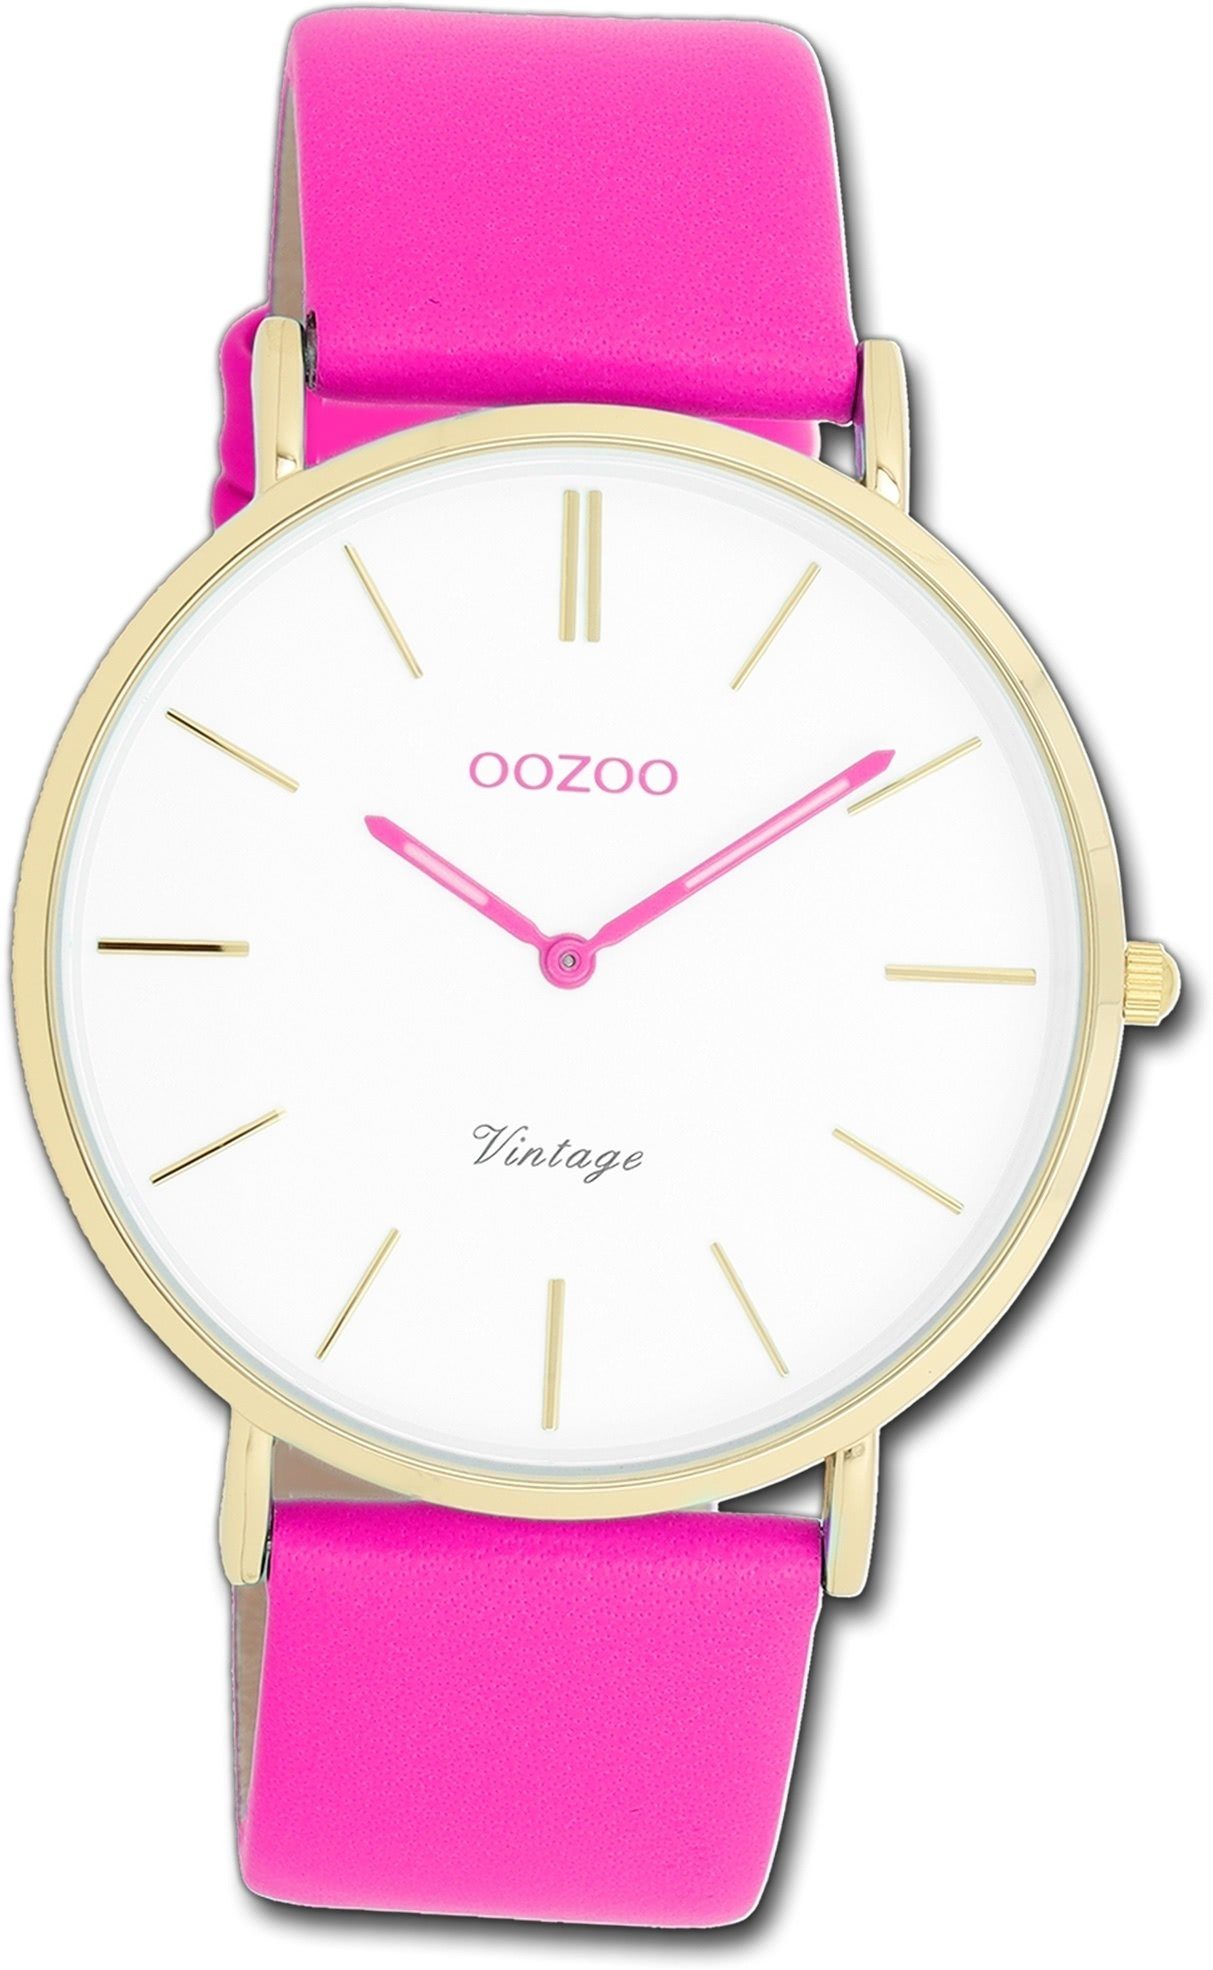 Gehäuse, Damen Oozoo 40mm) pink, OOZOO Lederarmband pink, rundes Armbanduhr Quarzuhr Vintage Damenuhr (ca. groß